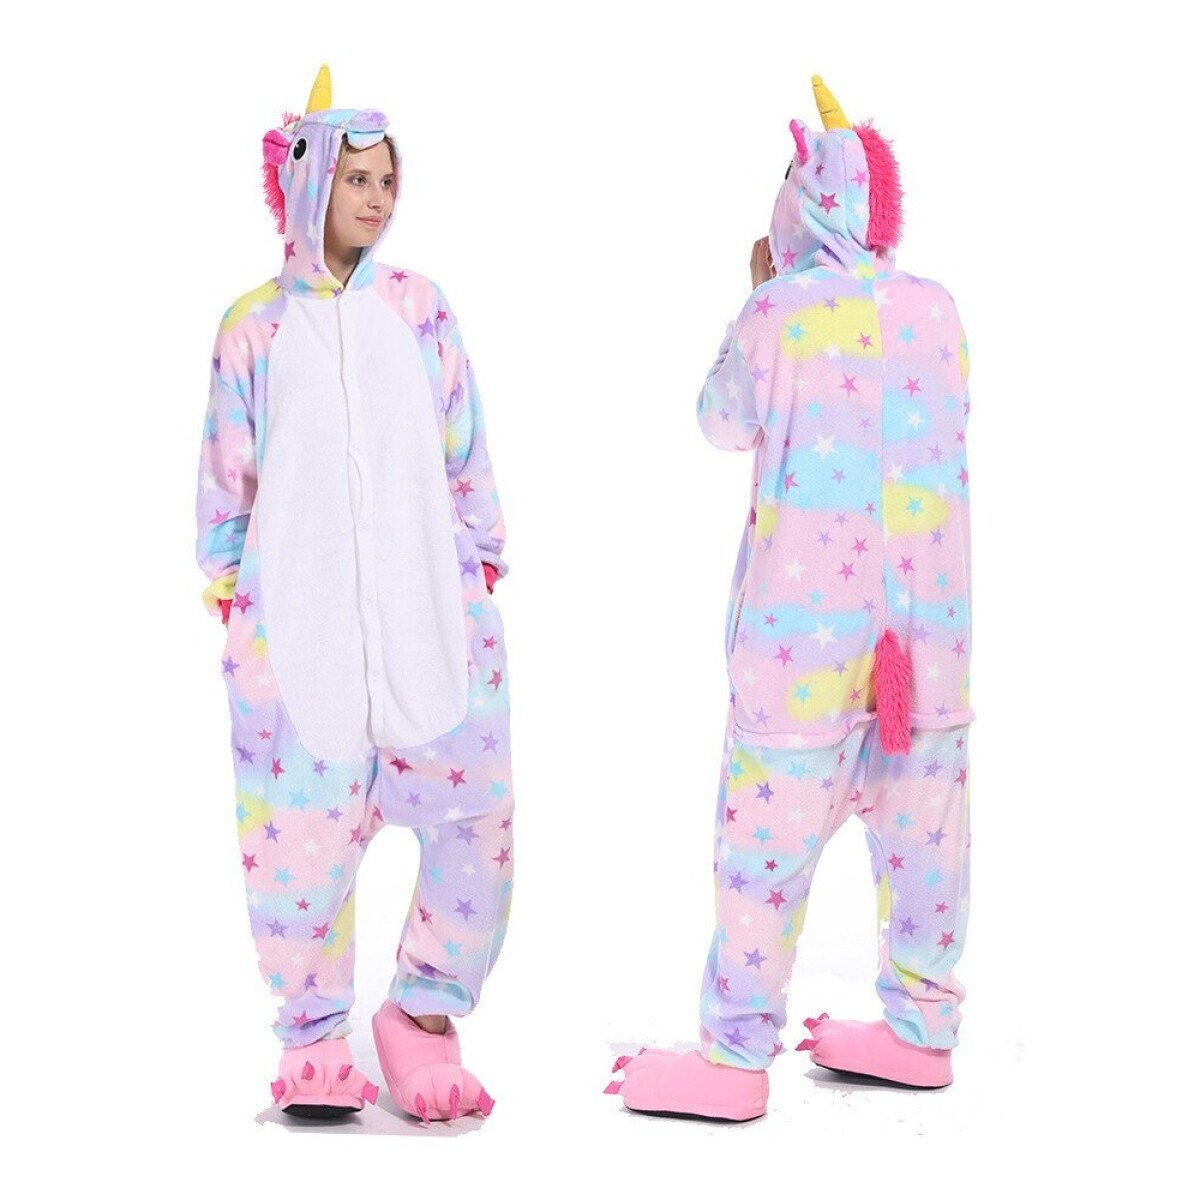 Pijama Entero de Plush Abrigado para Adultos Diseño Unicornio - Multicolor 